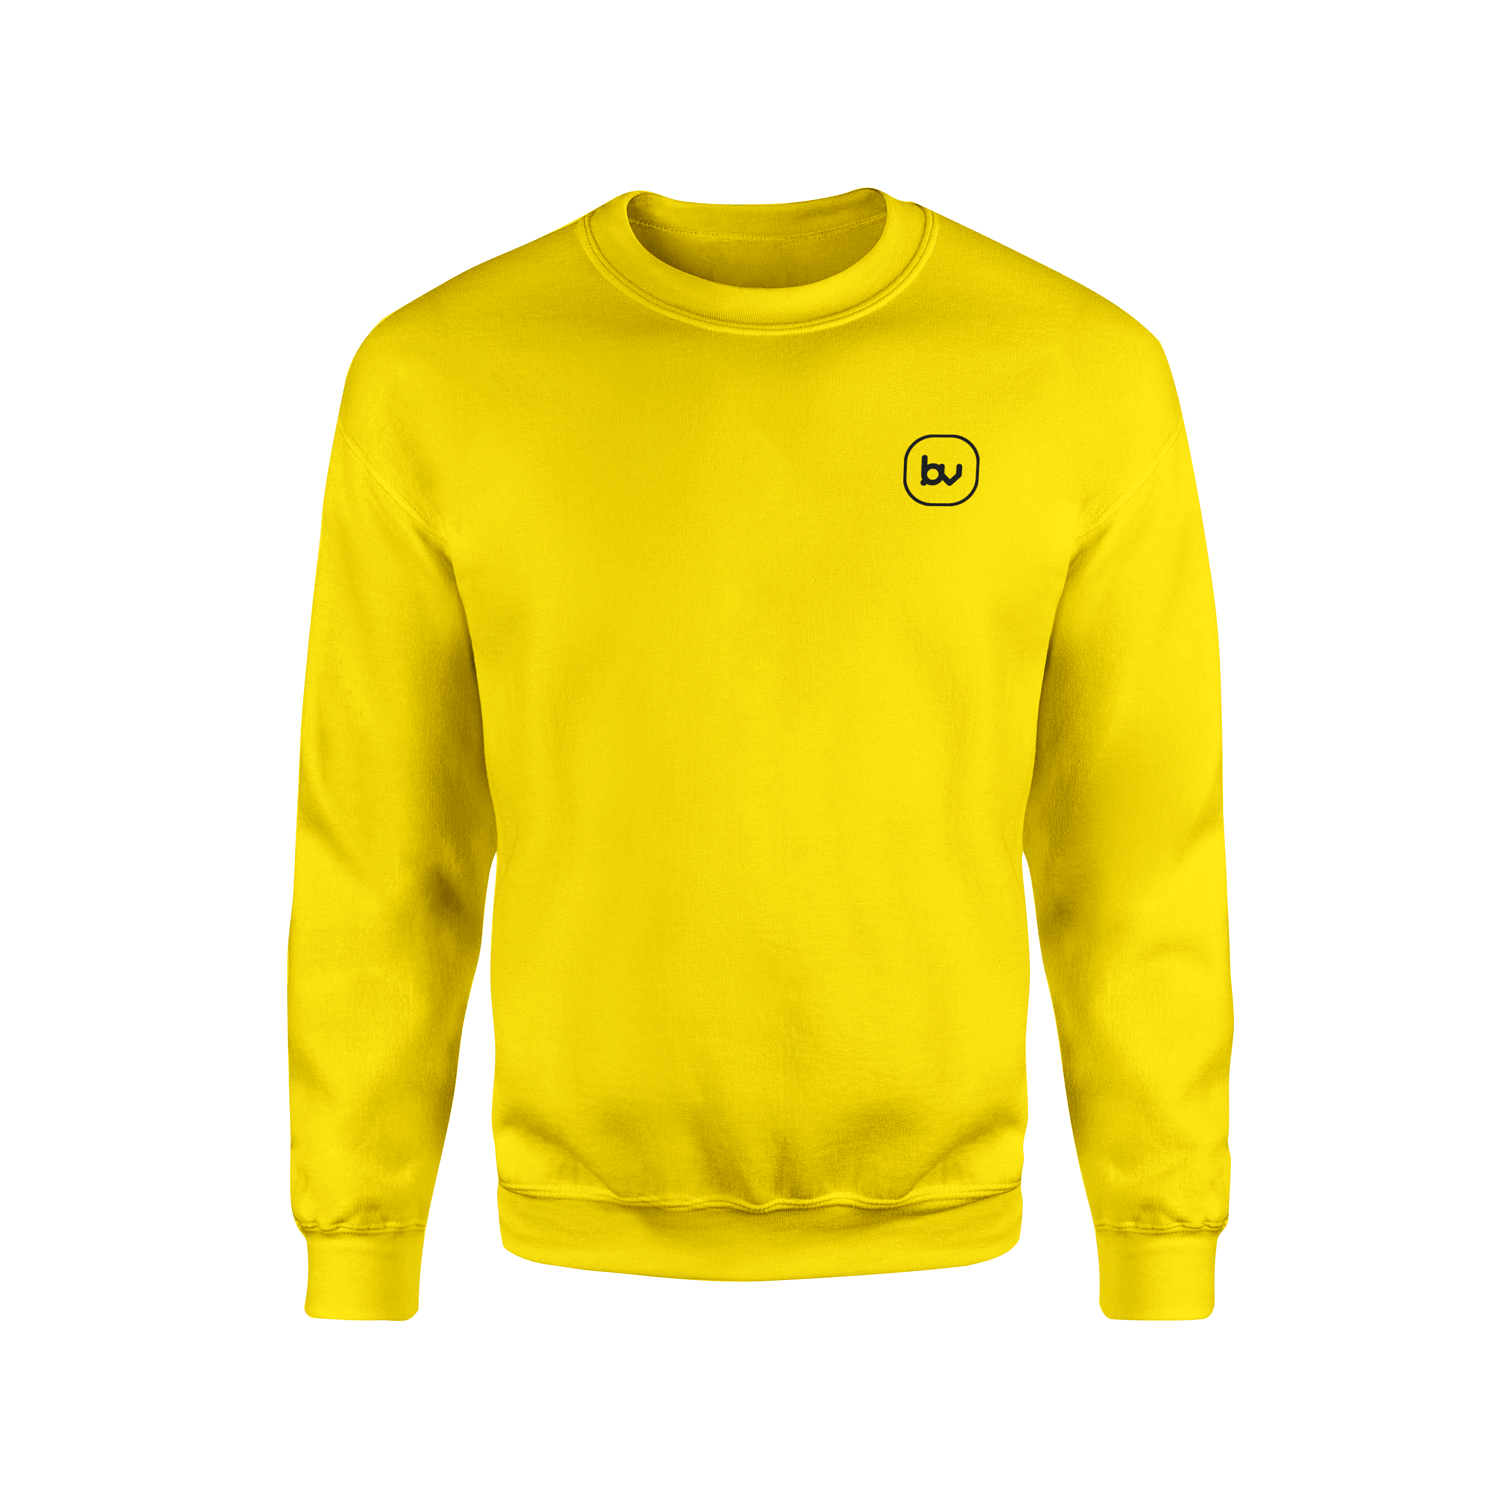 Bazarville Tshirt S / Sun Yellow Sweatshirt - Yellow